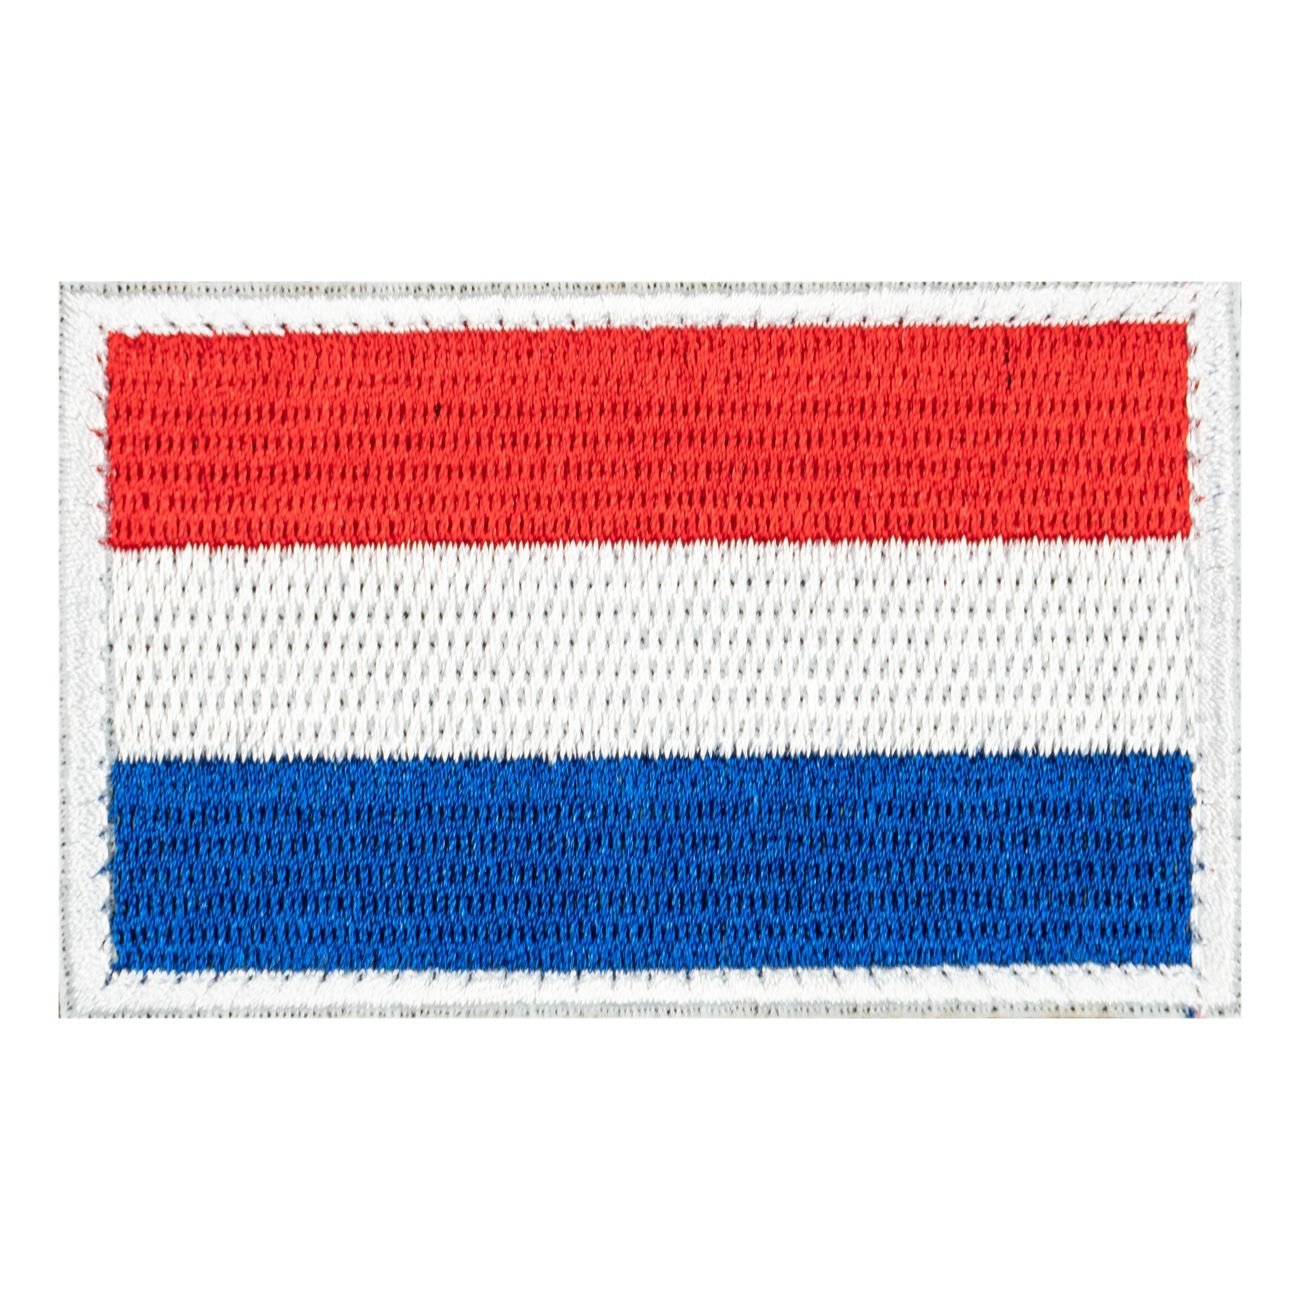 tygmarke-nederlandska-flaggan-92024-1